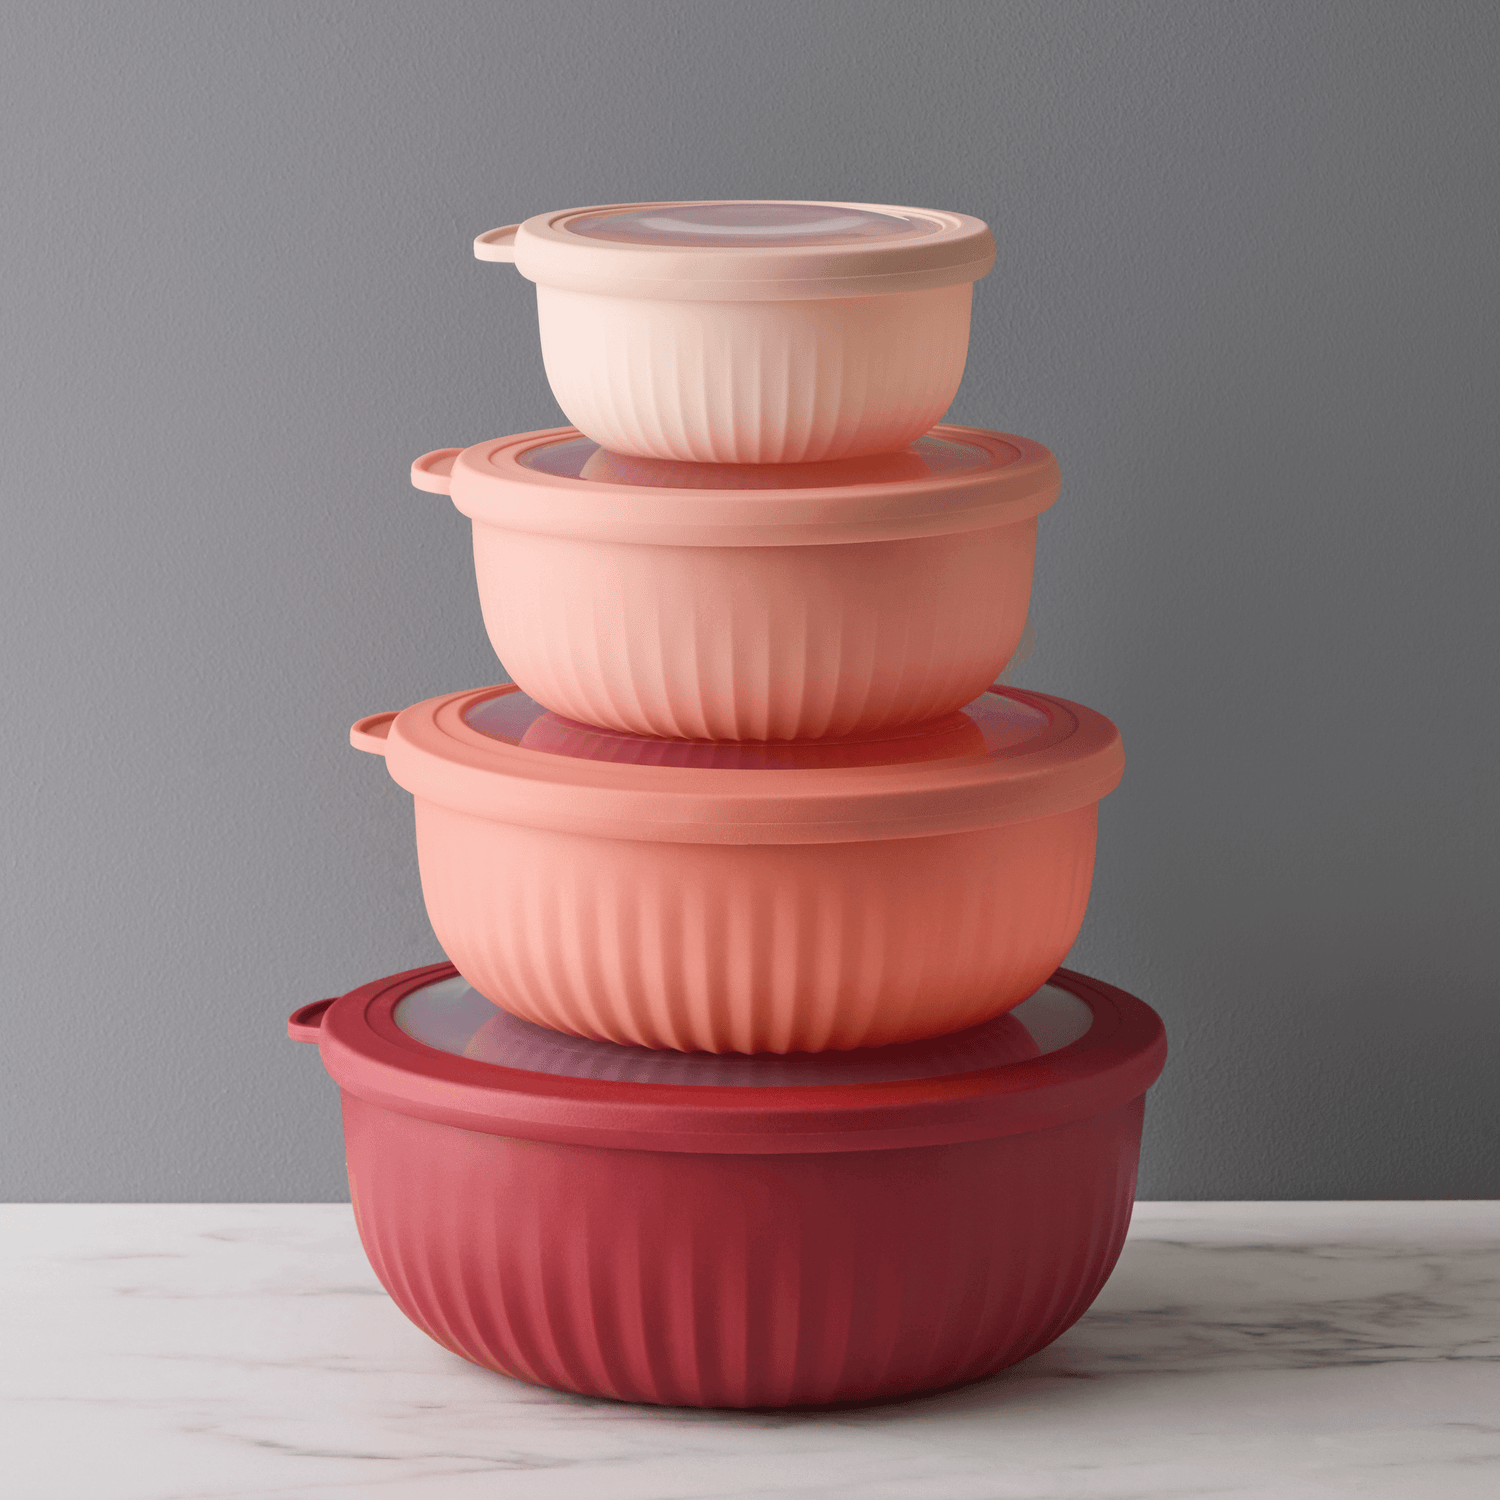 20-Piece Strawberry Design Glass Bowls with Lids Set- Mixing Bowls Set